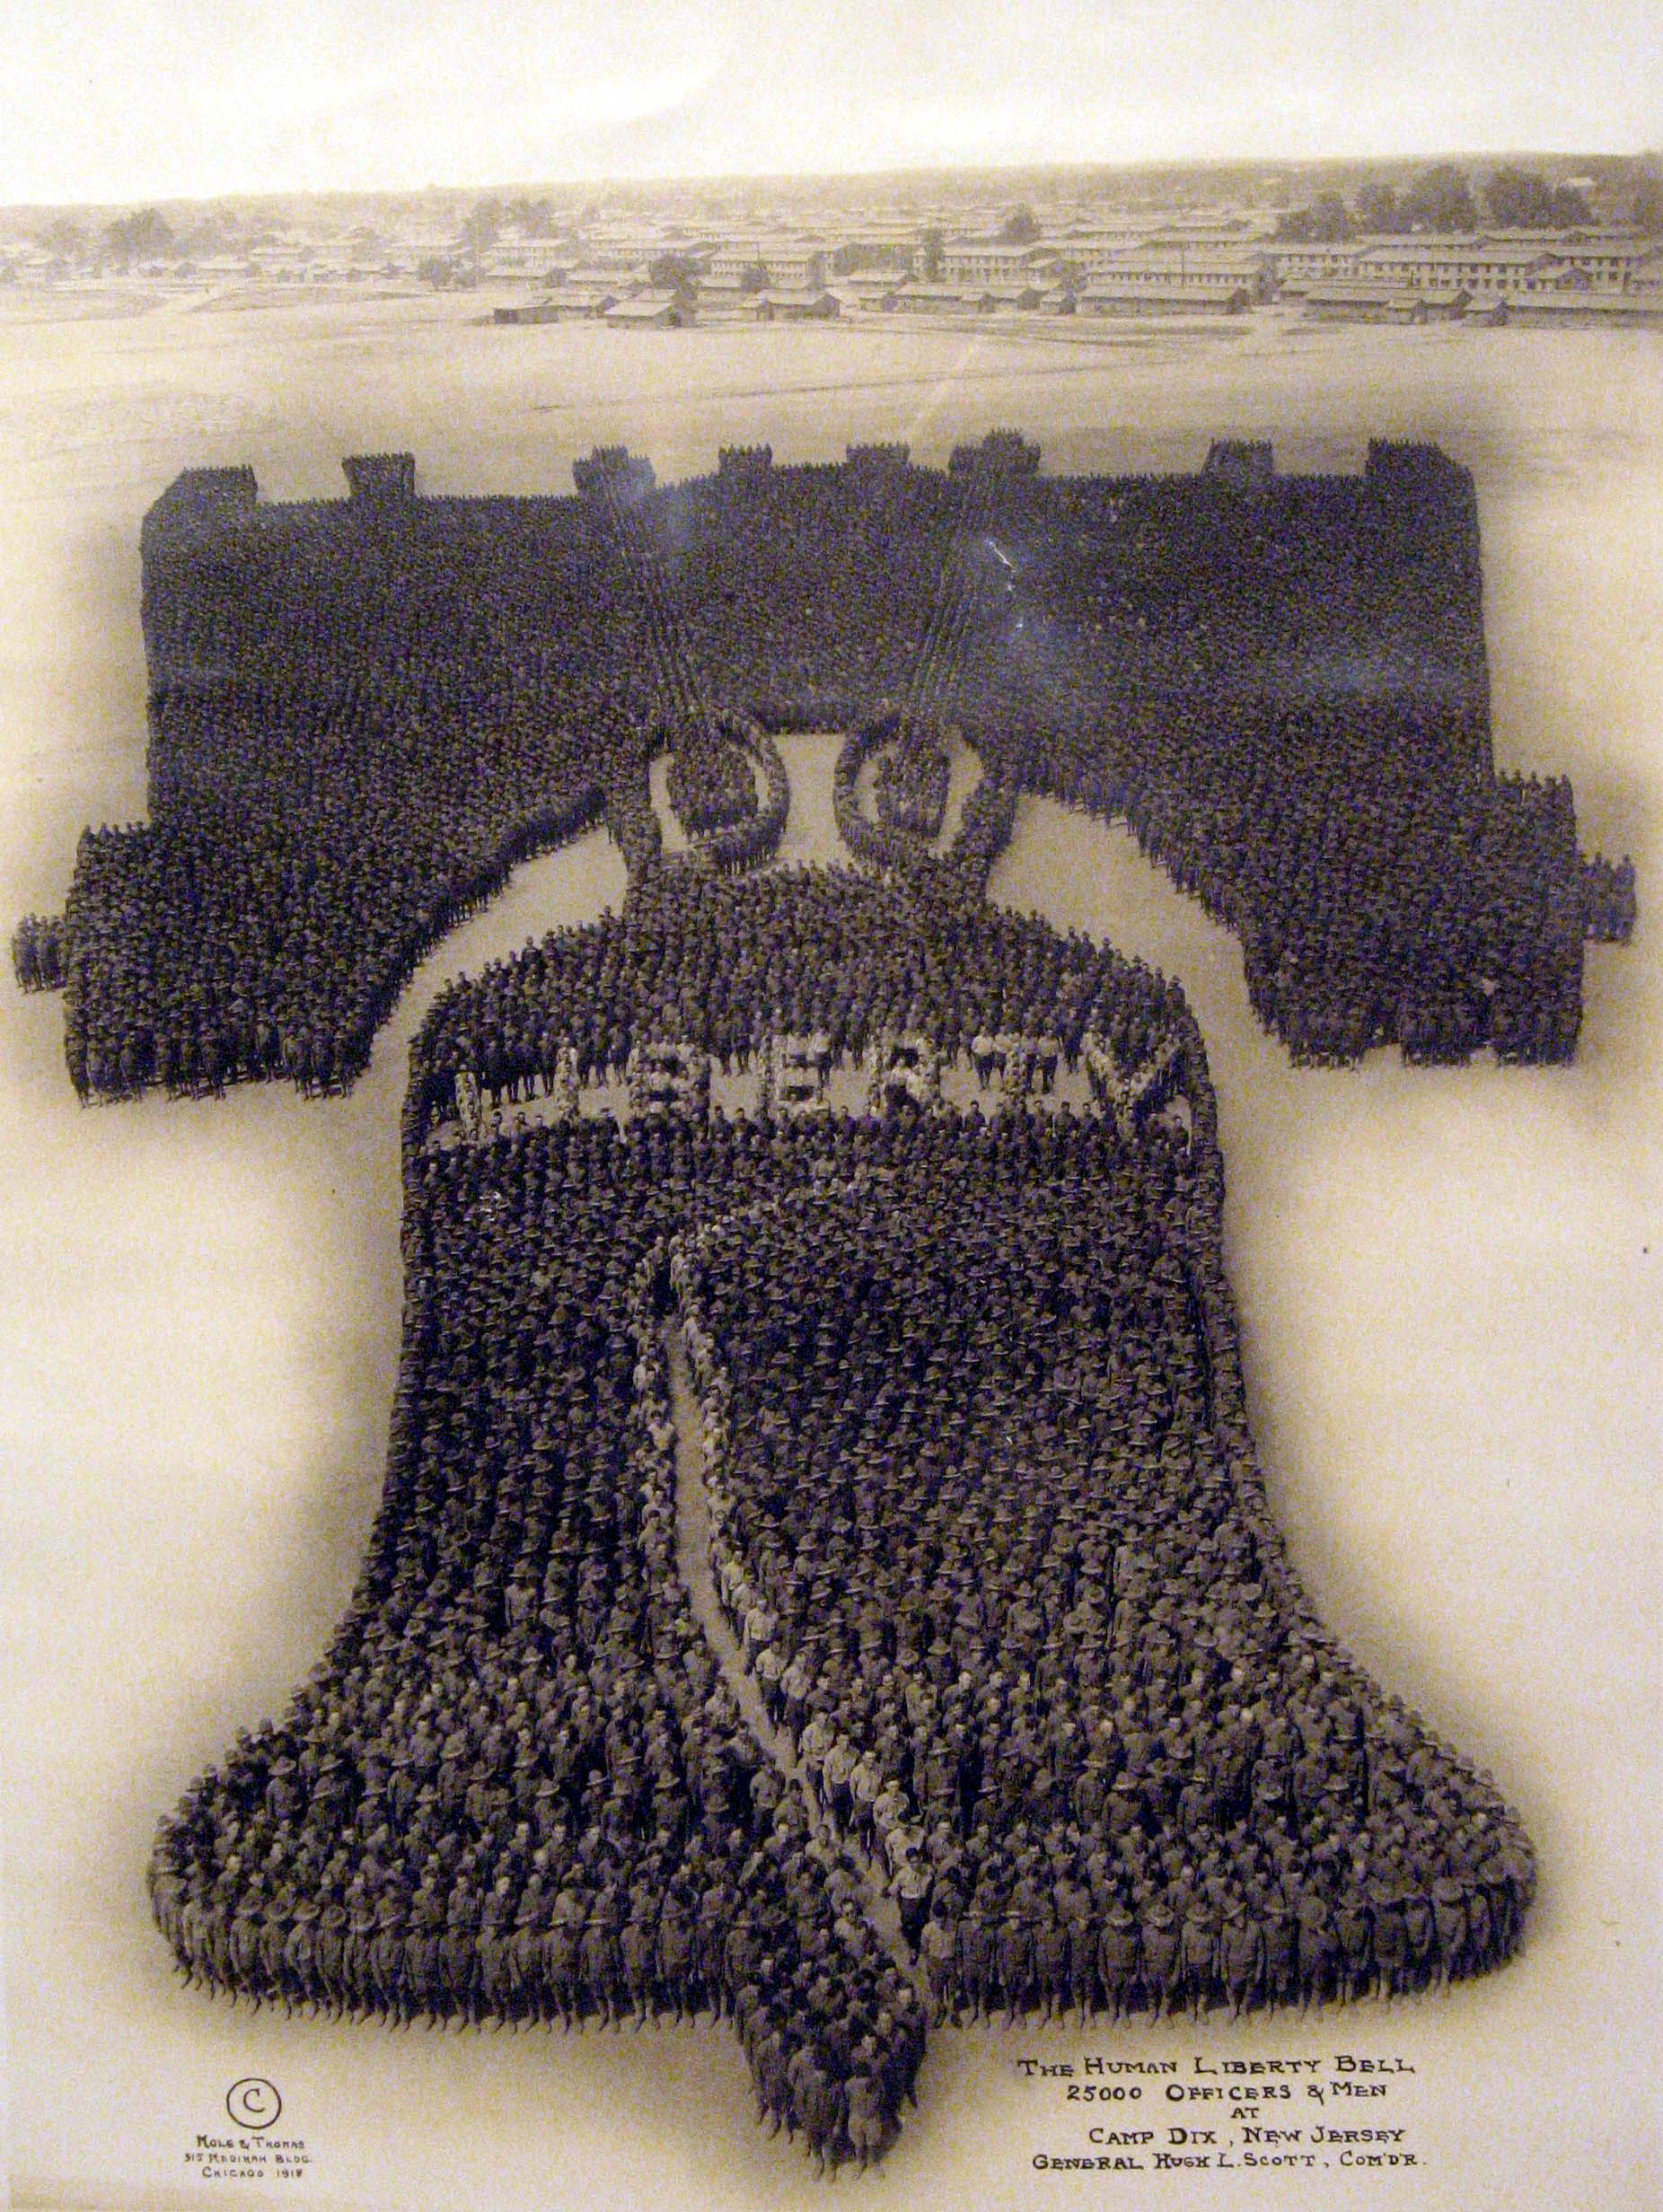 The Human Liberty Bell, 1918